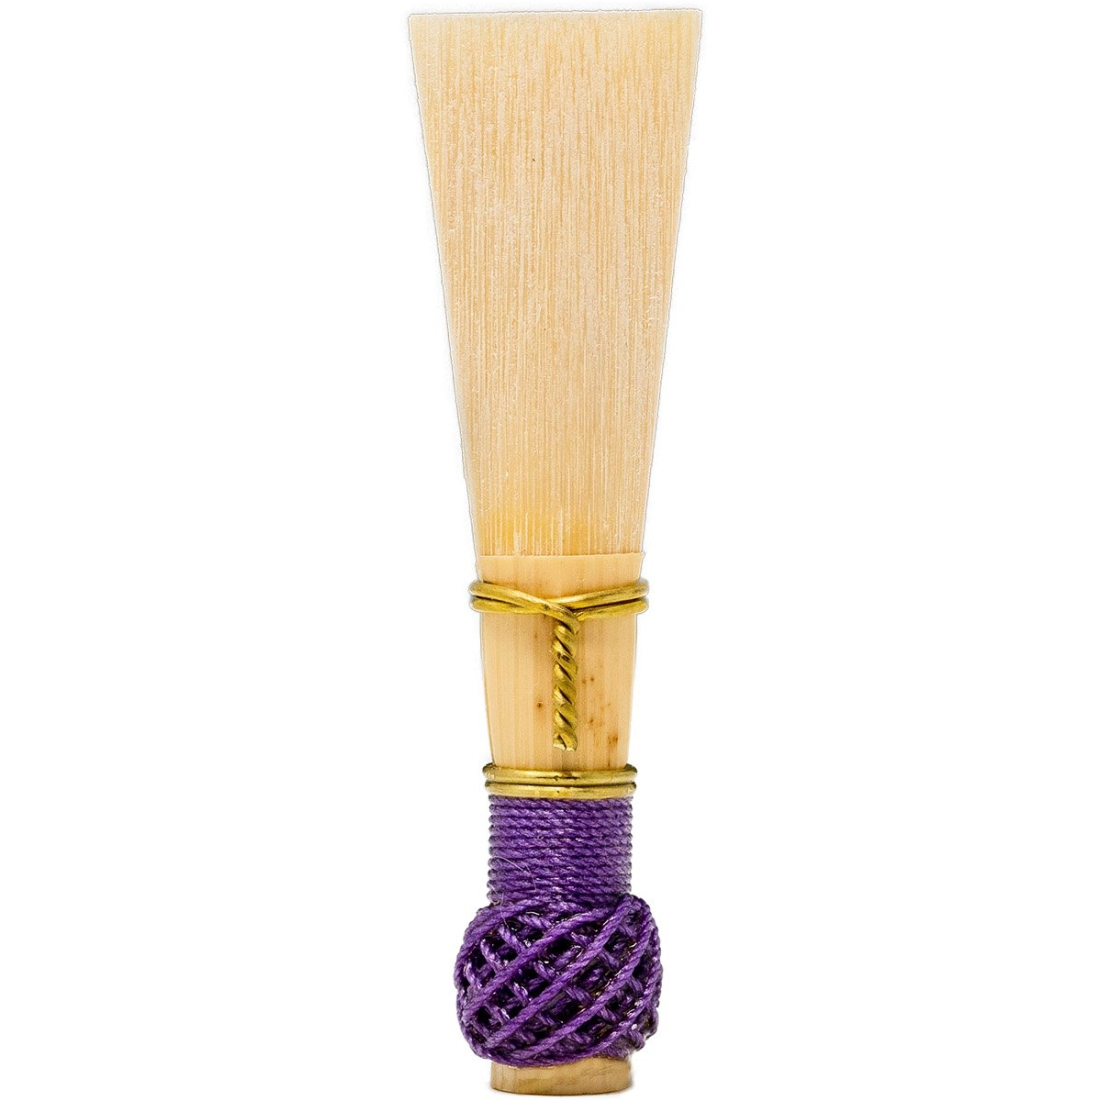 Jones Artist series Bassoon Reed cane wound with purple string - strength of Medium Soft